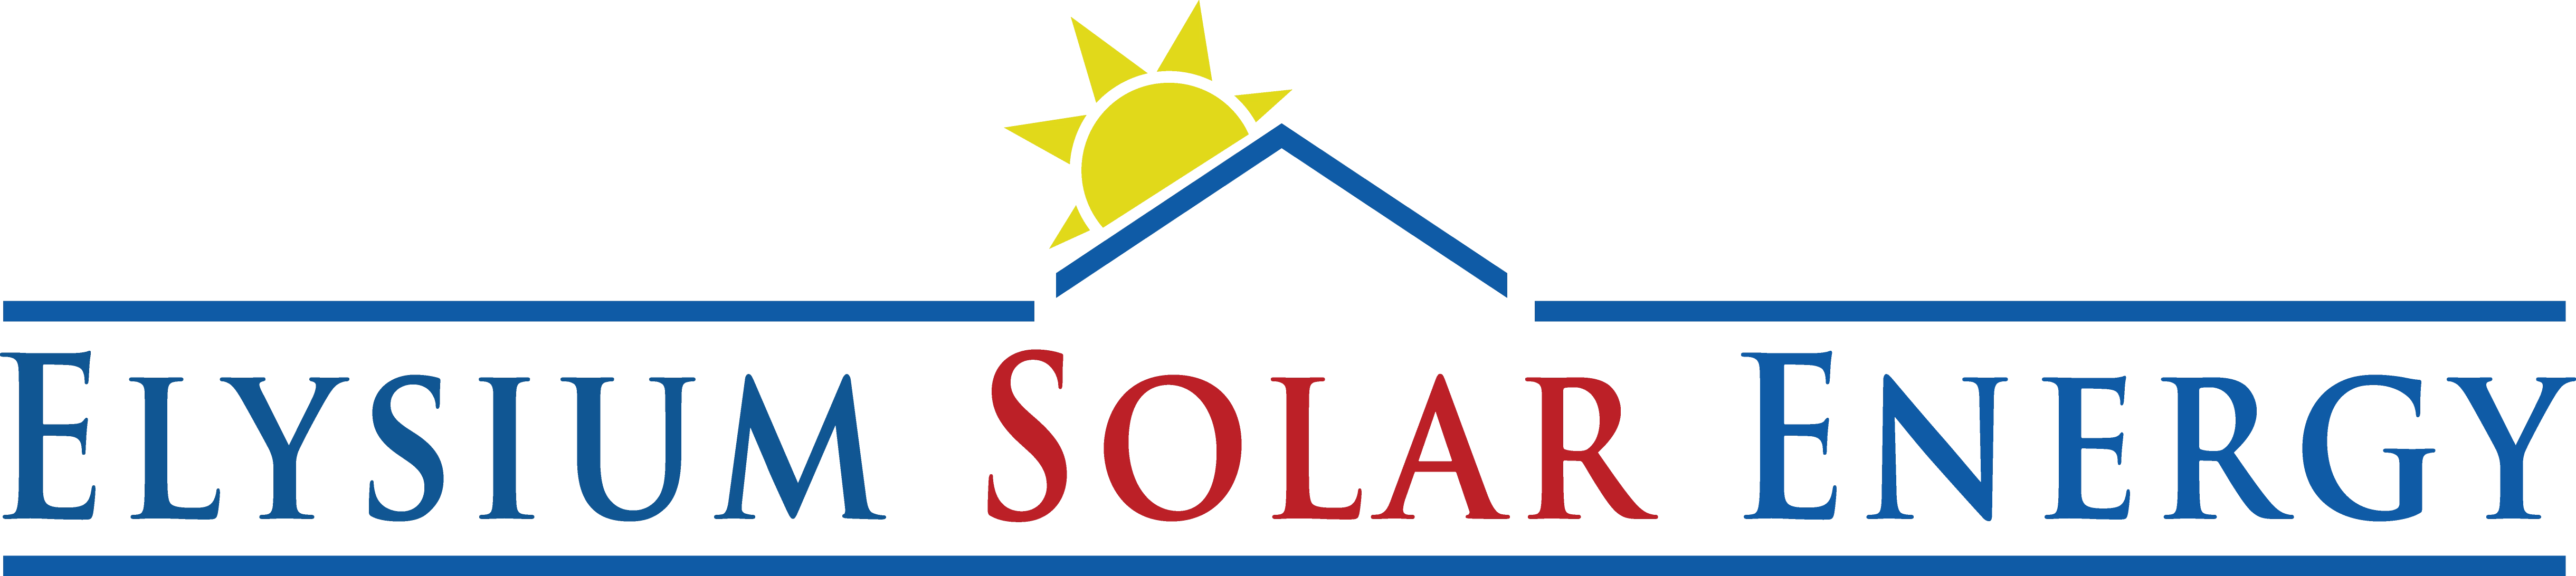 Elysium Solar Energy Logo